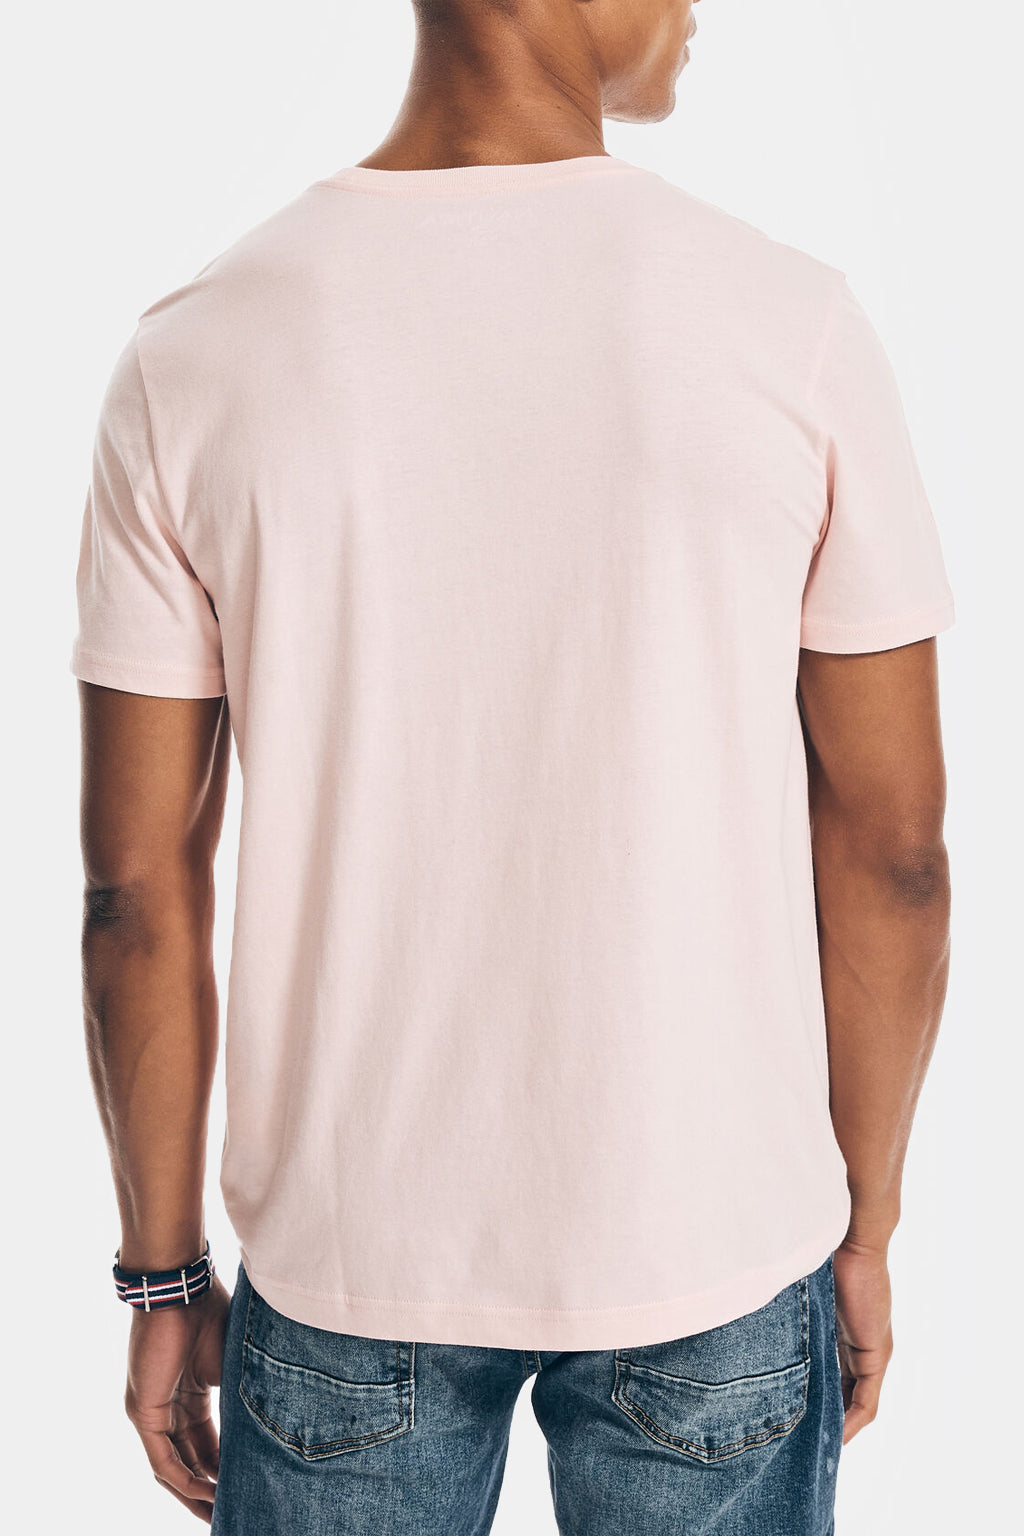 Nautica - Solid Short Sleeve Round neck Tee T-Shirt